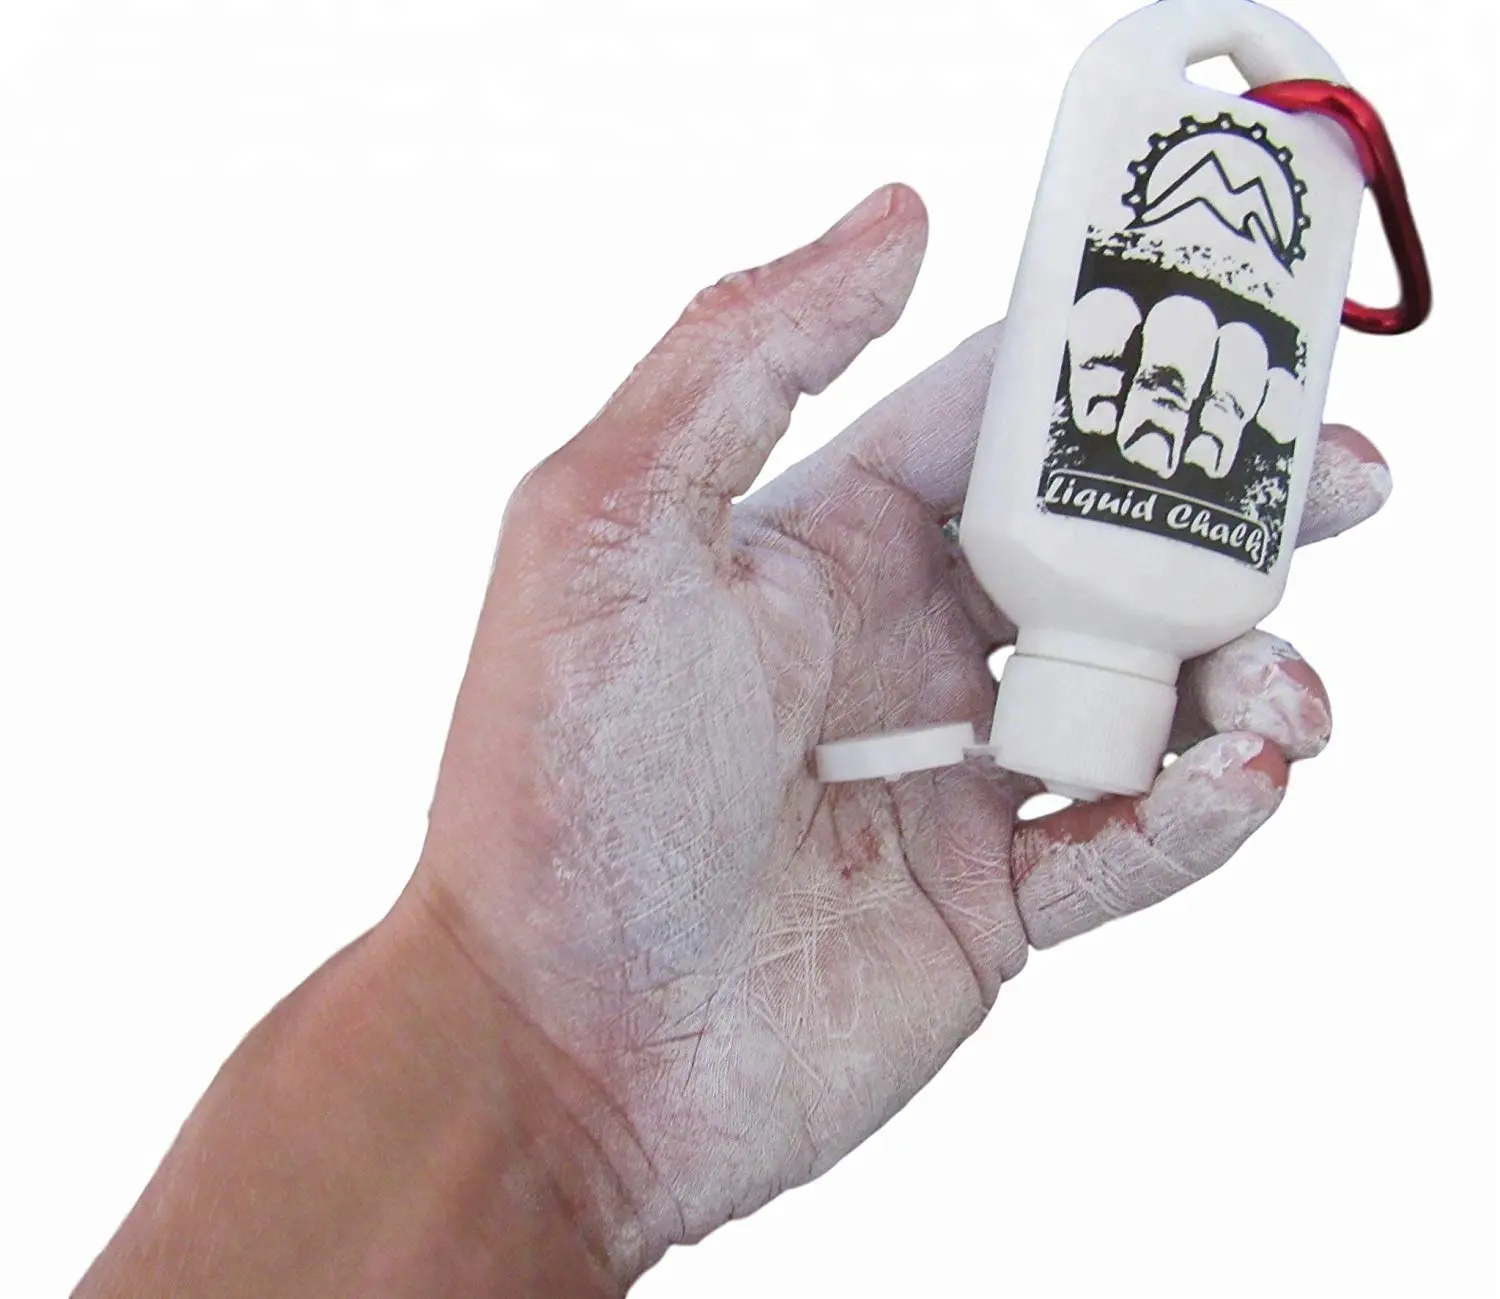 Mosher Mountain Gear 50 ML White Liquid Gym Chalk Hand Grip - With BONUS Carabiner Clip